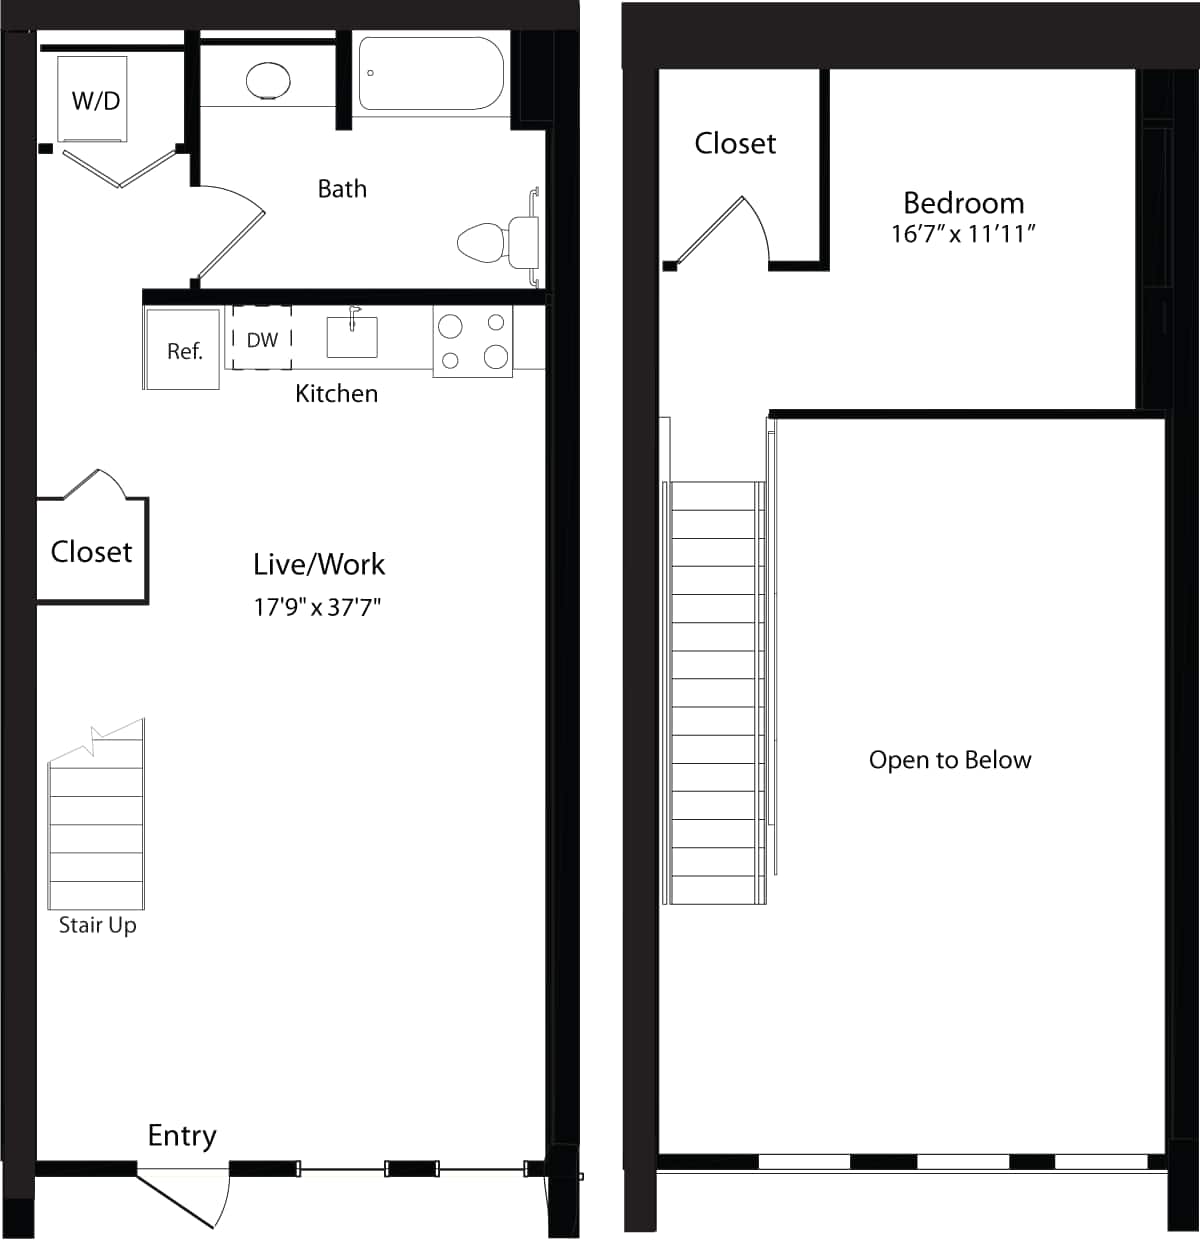 Floorplan diagram for F2, showing Studio